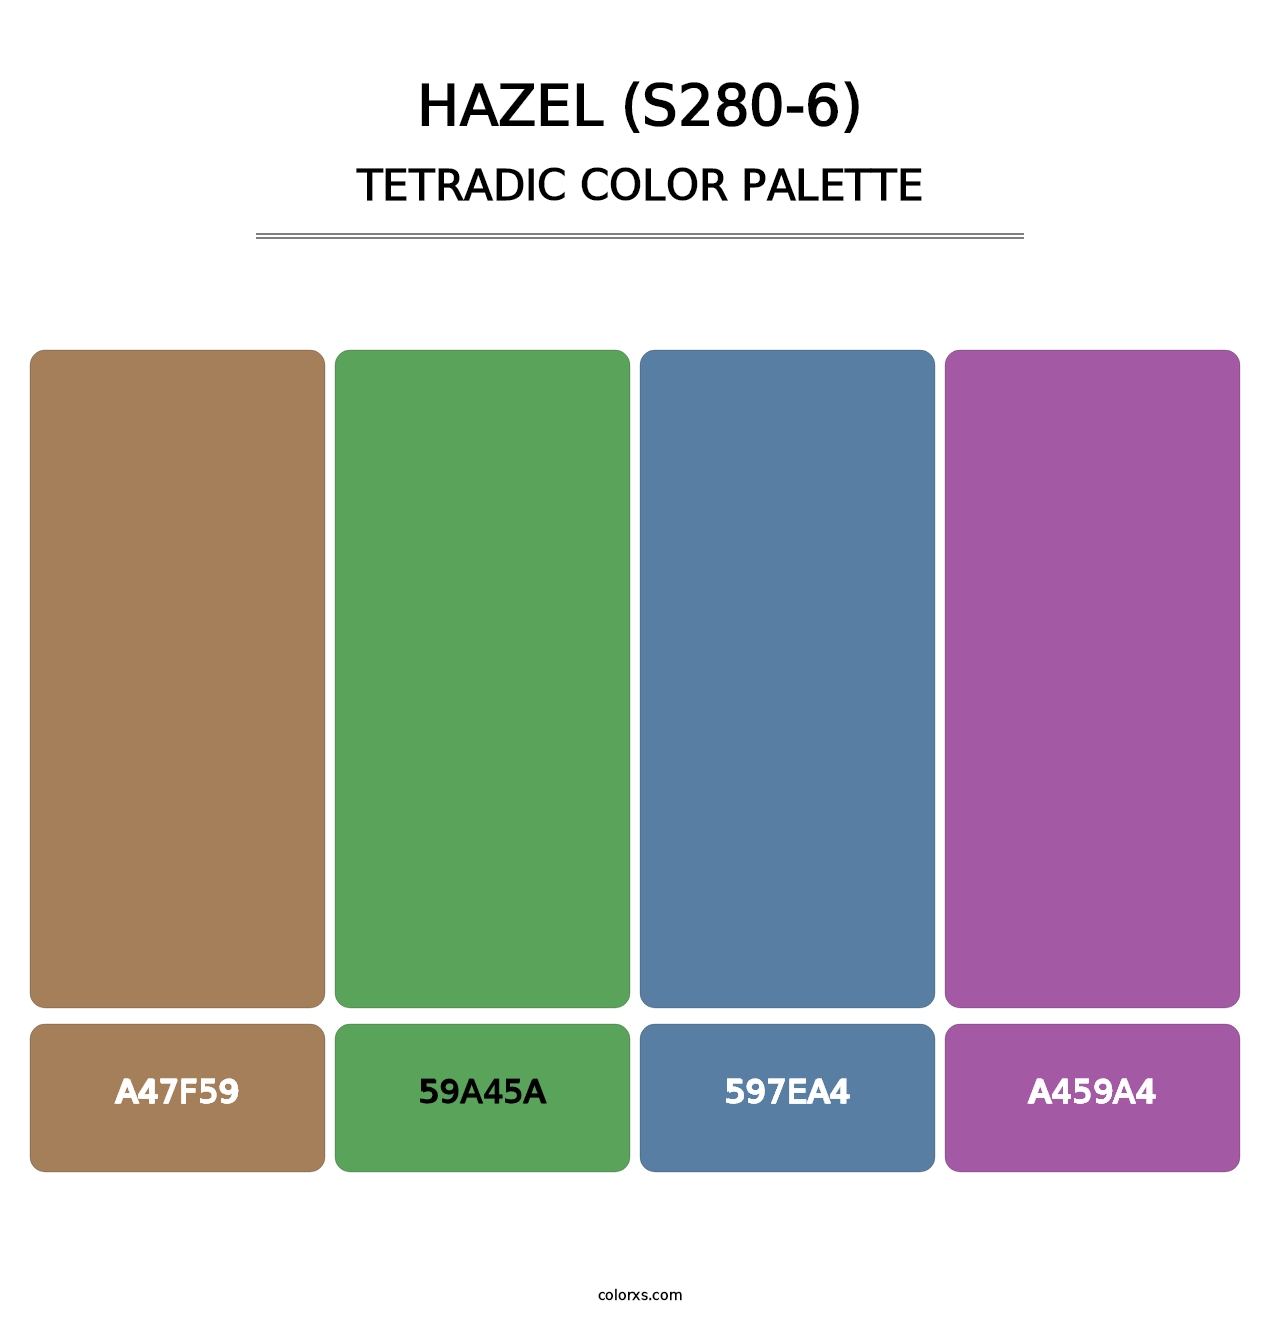 Hazel (S280-6) - Tetradic Color Palette